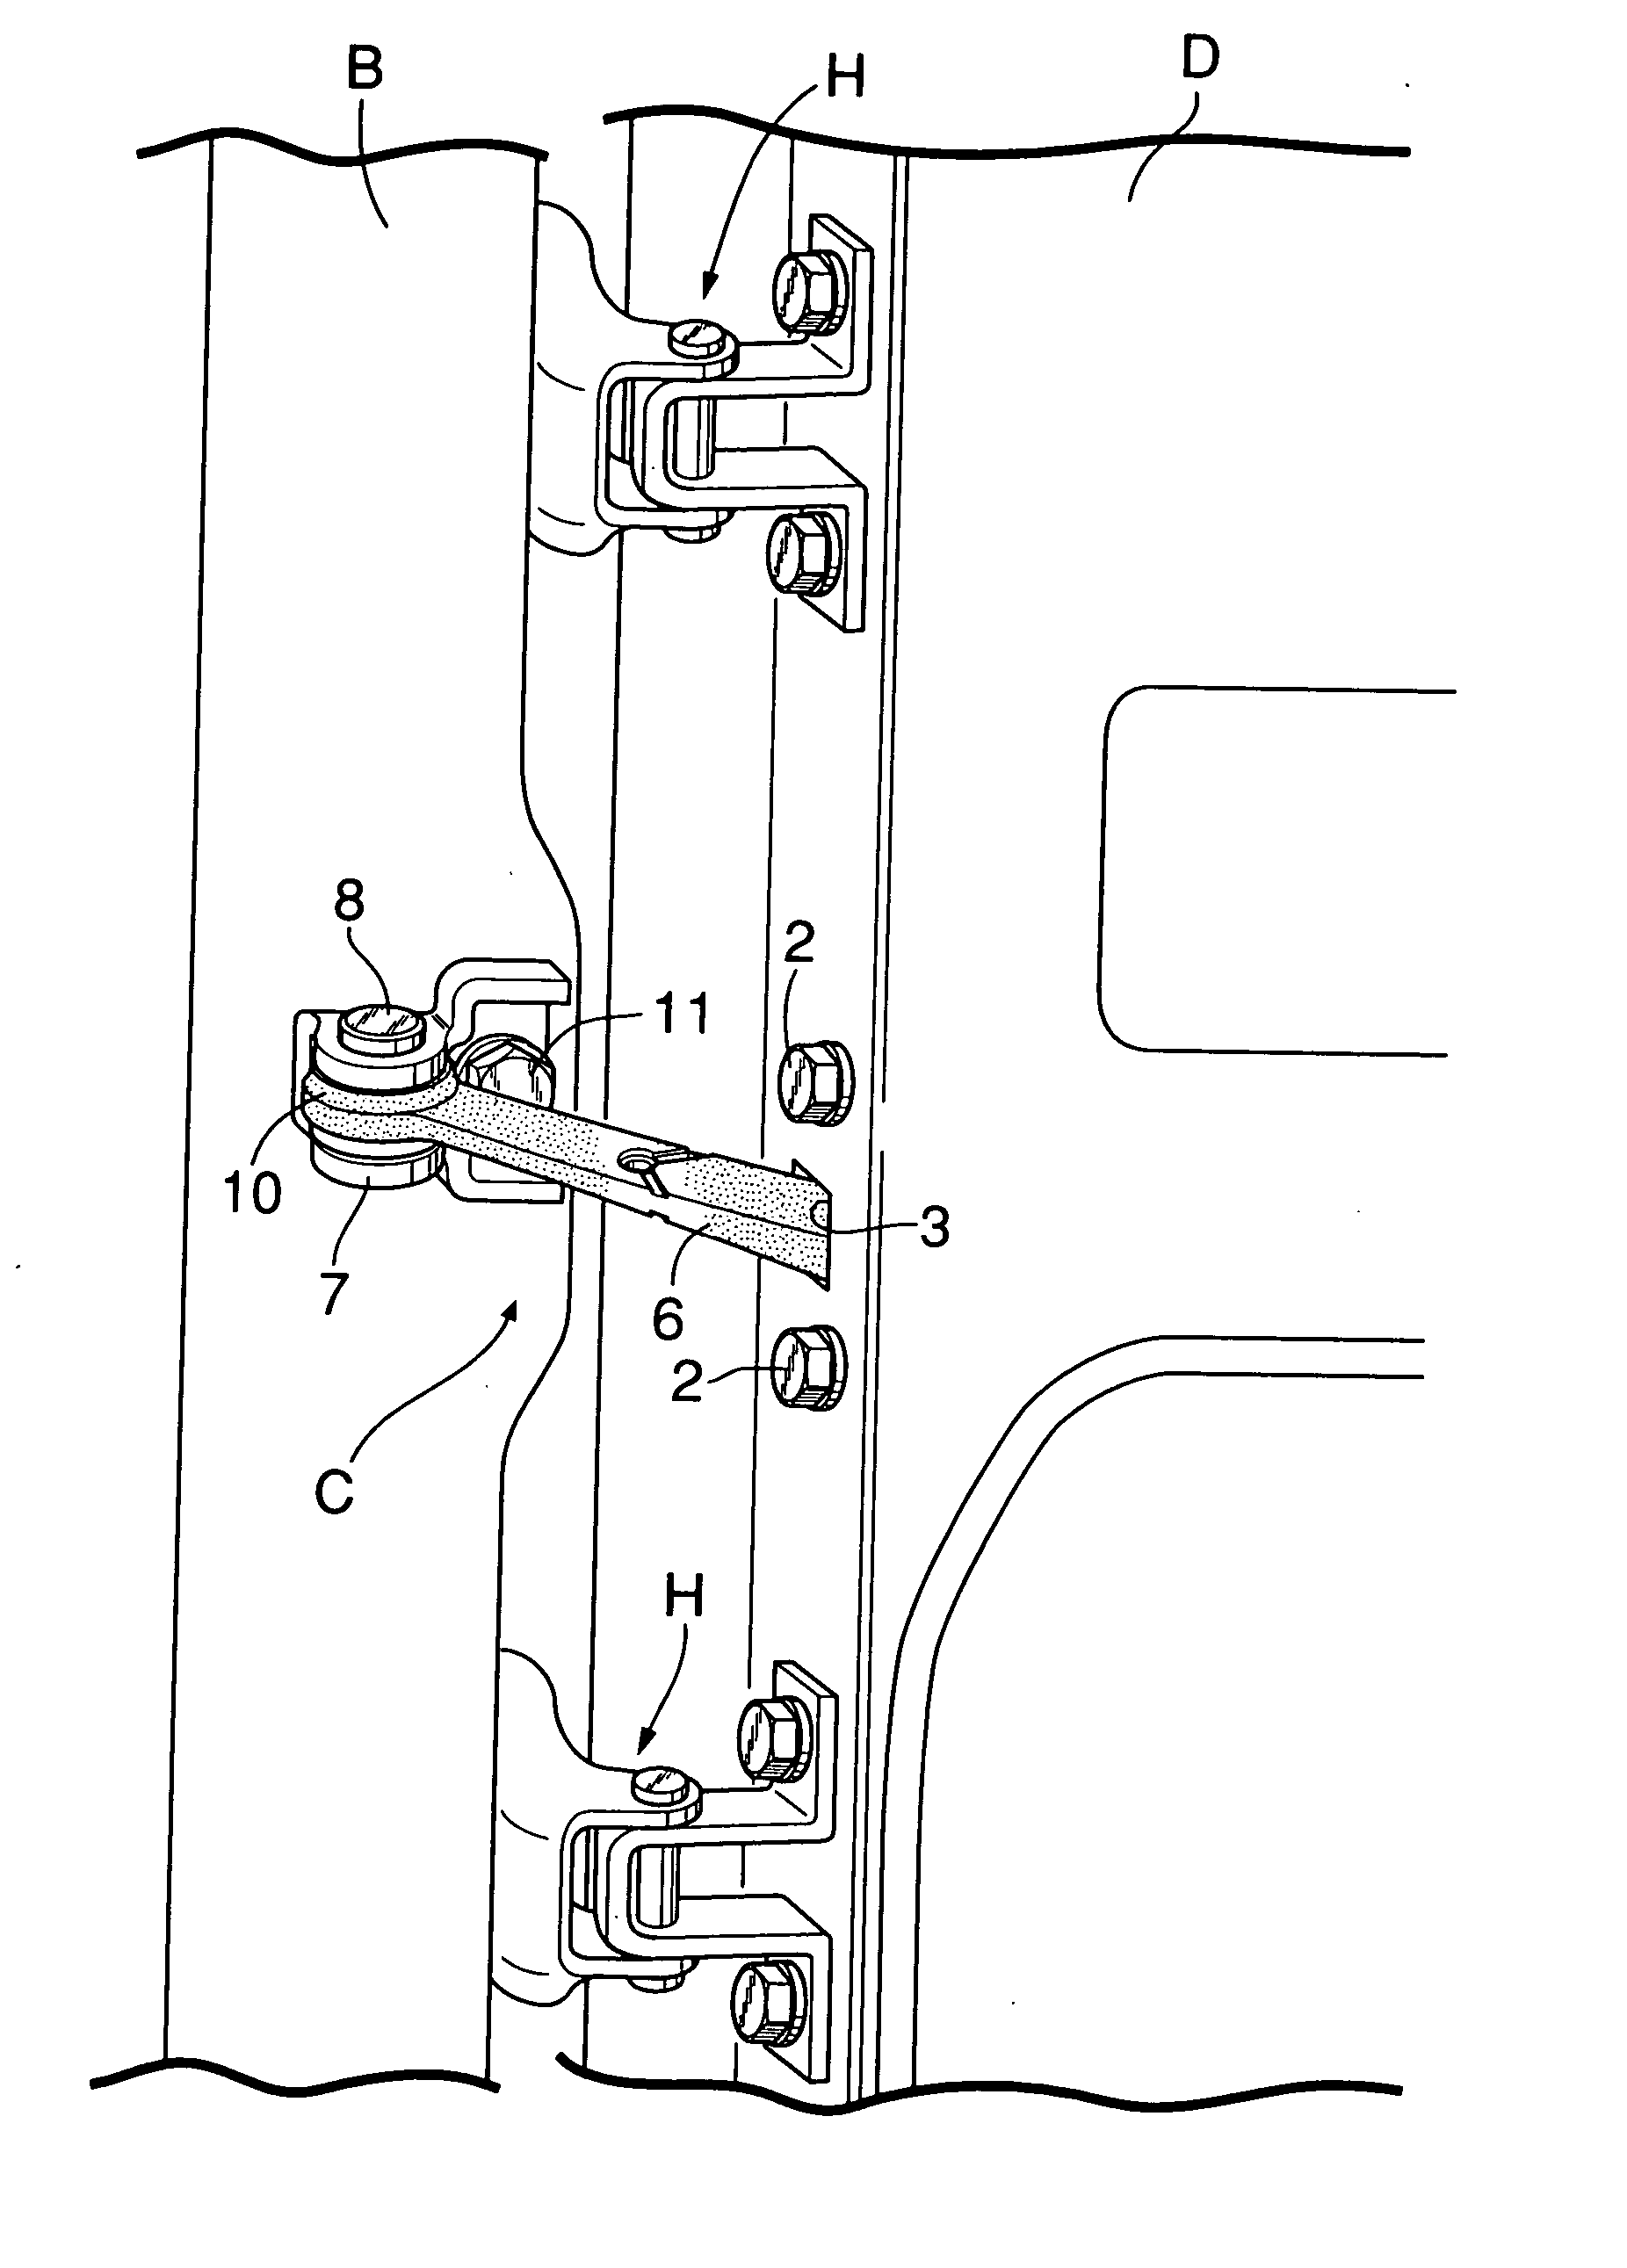 Door checker for automobile